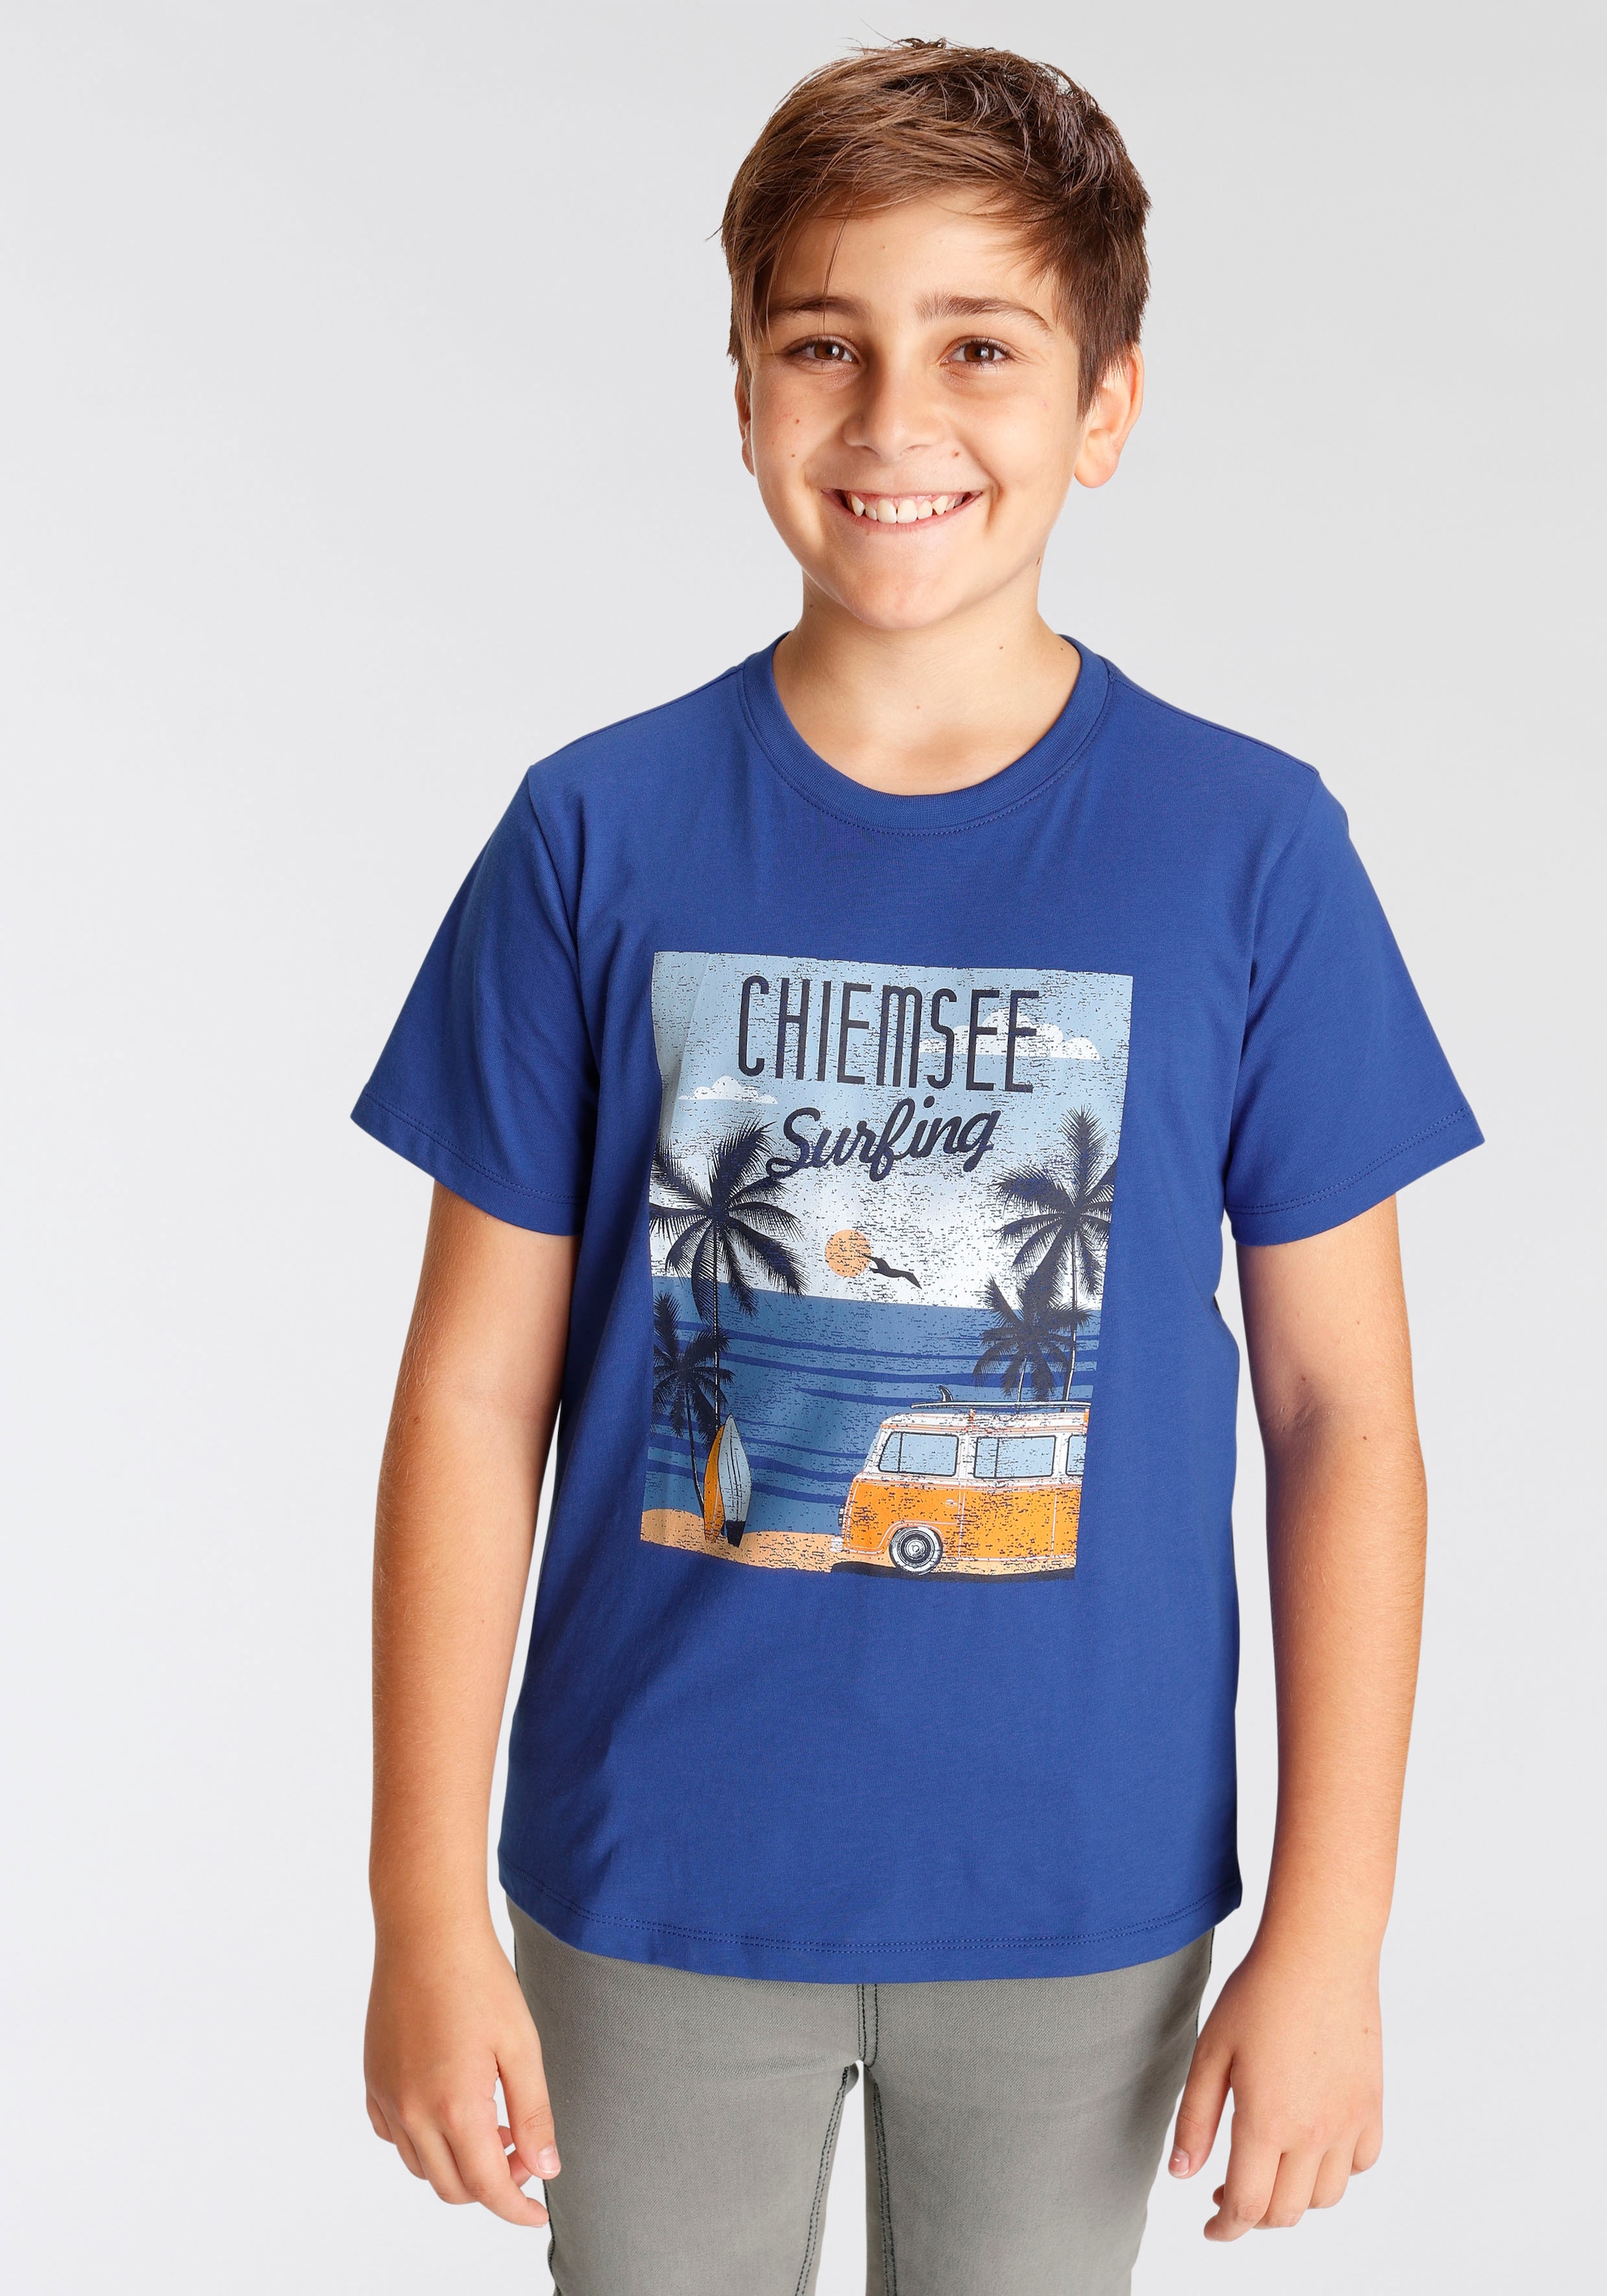 Chiemsee »Surfing« bei T-Shirt